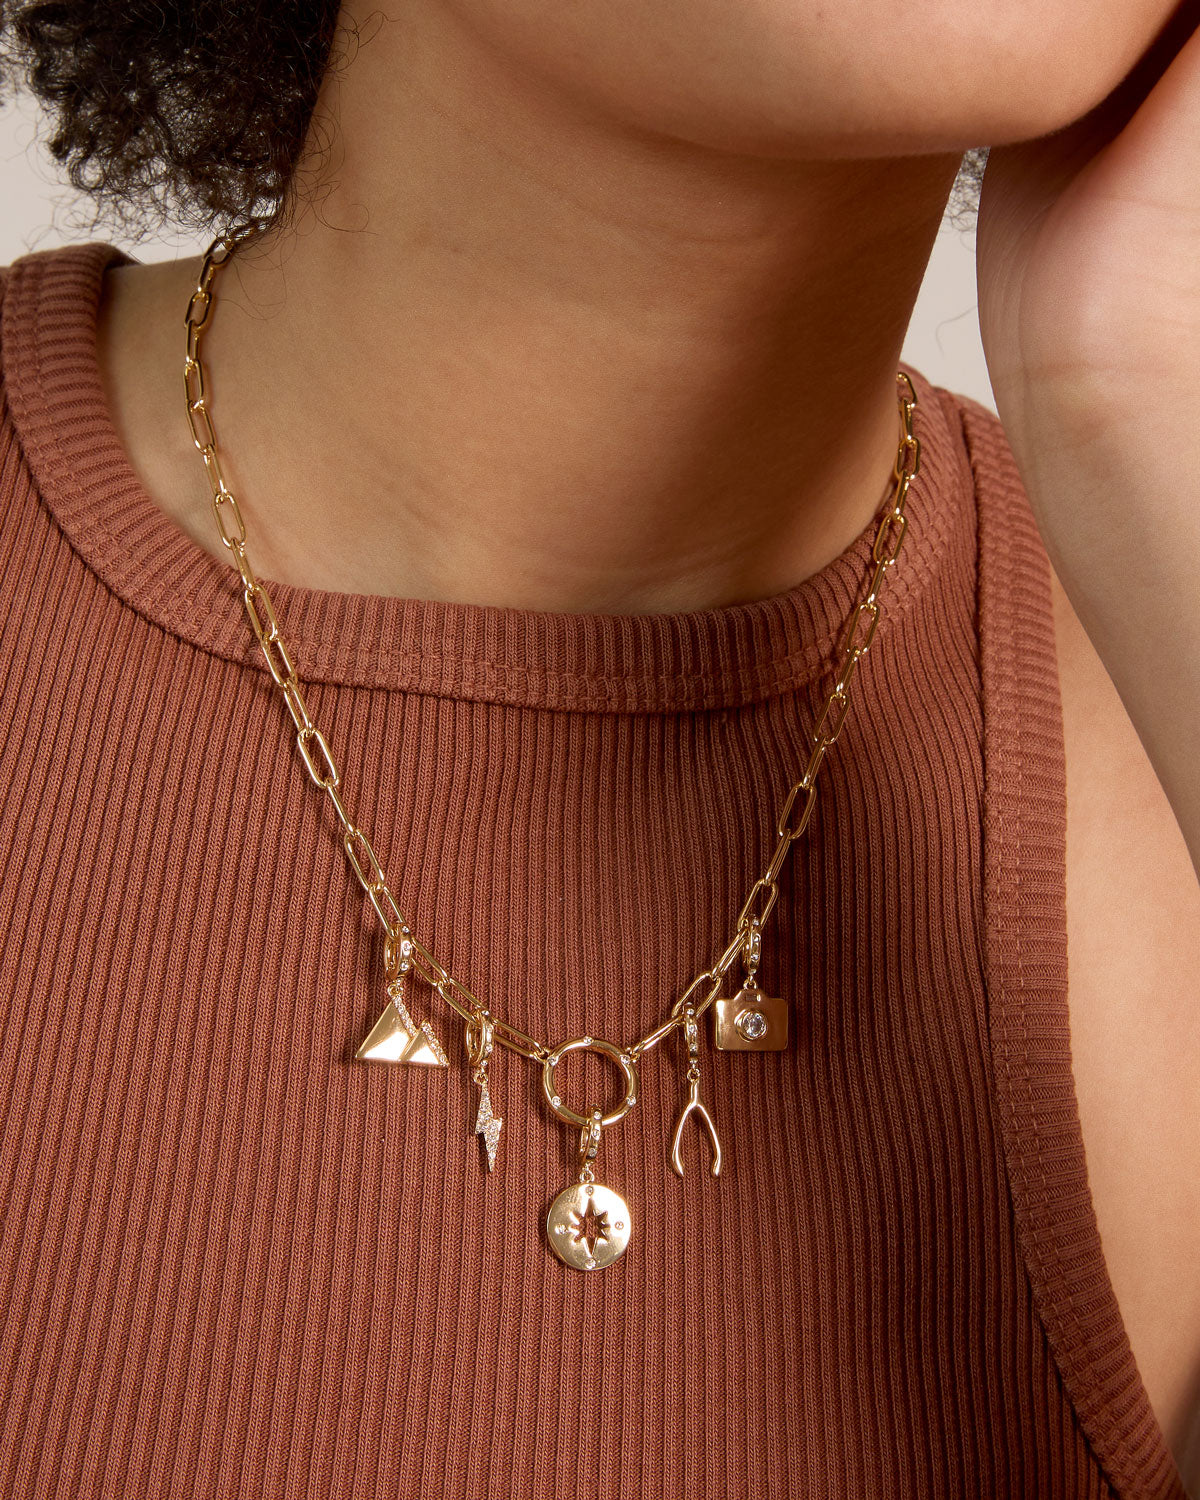 Jennifer Zeuner Jewelry | Emerson Personalized Necklace